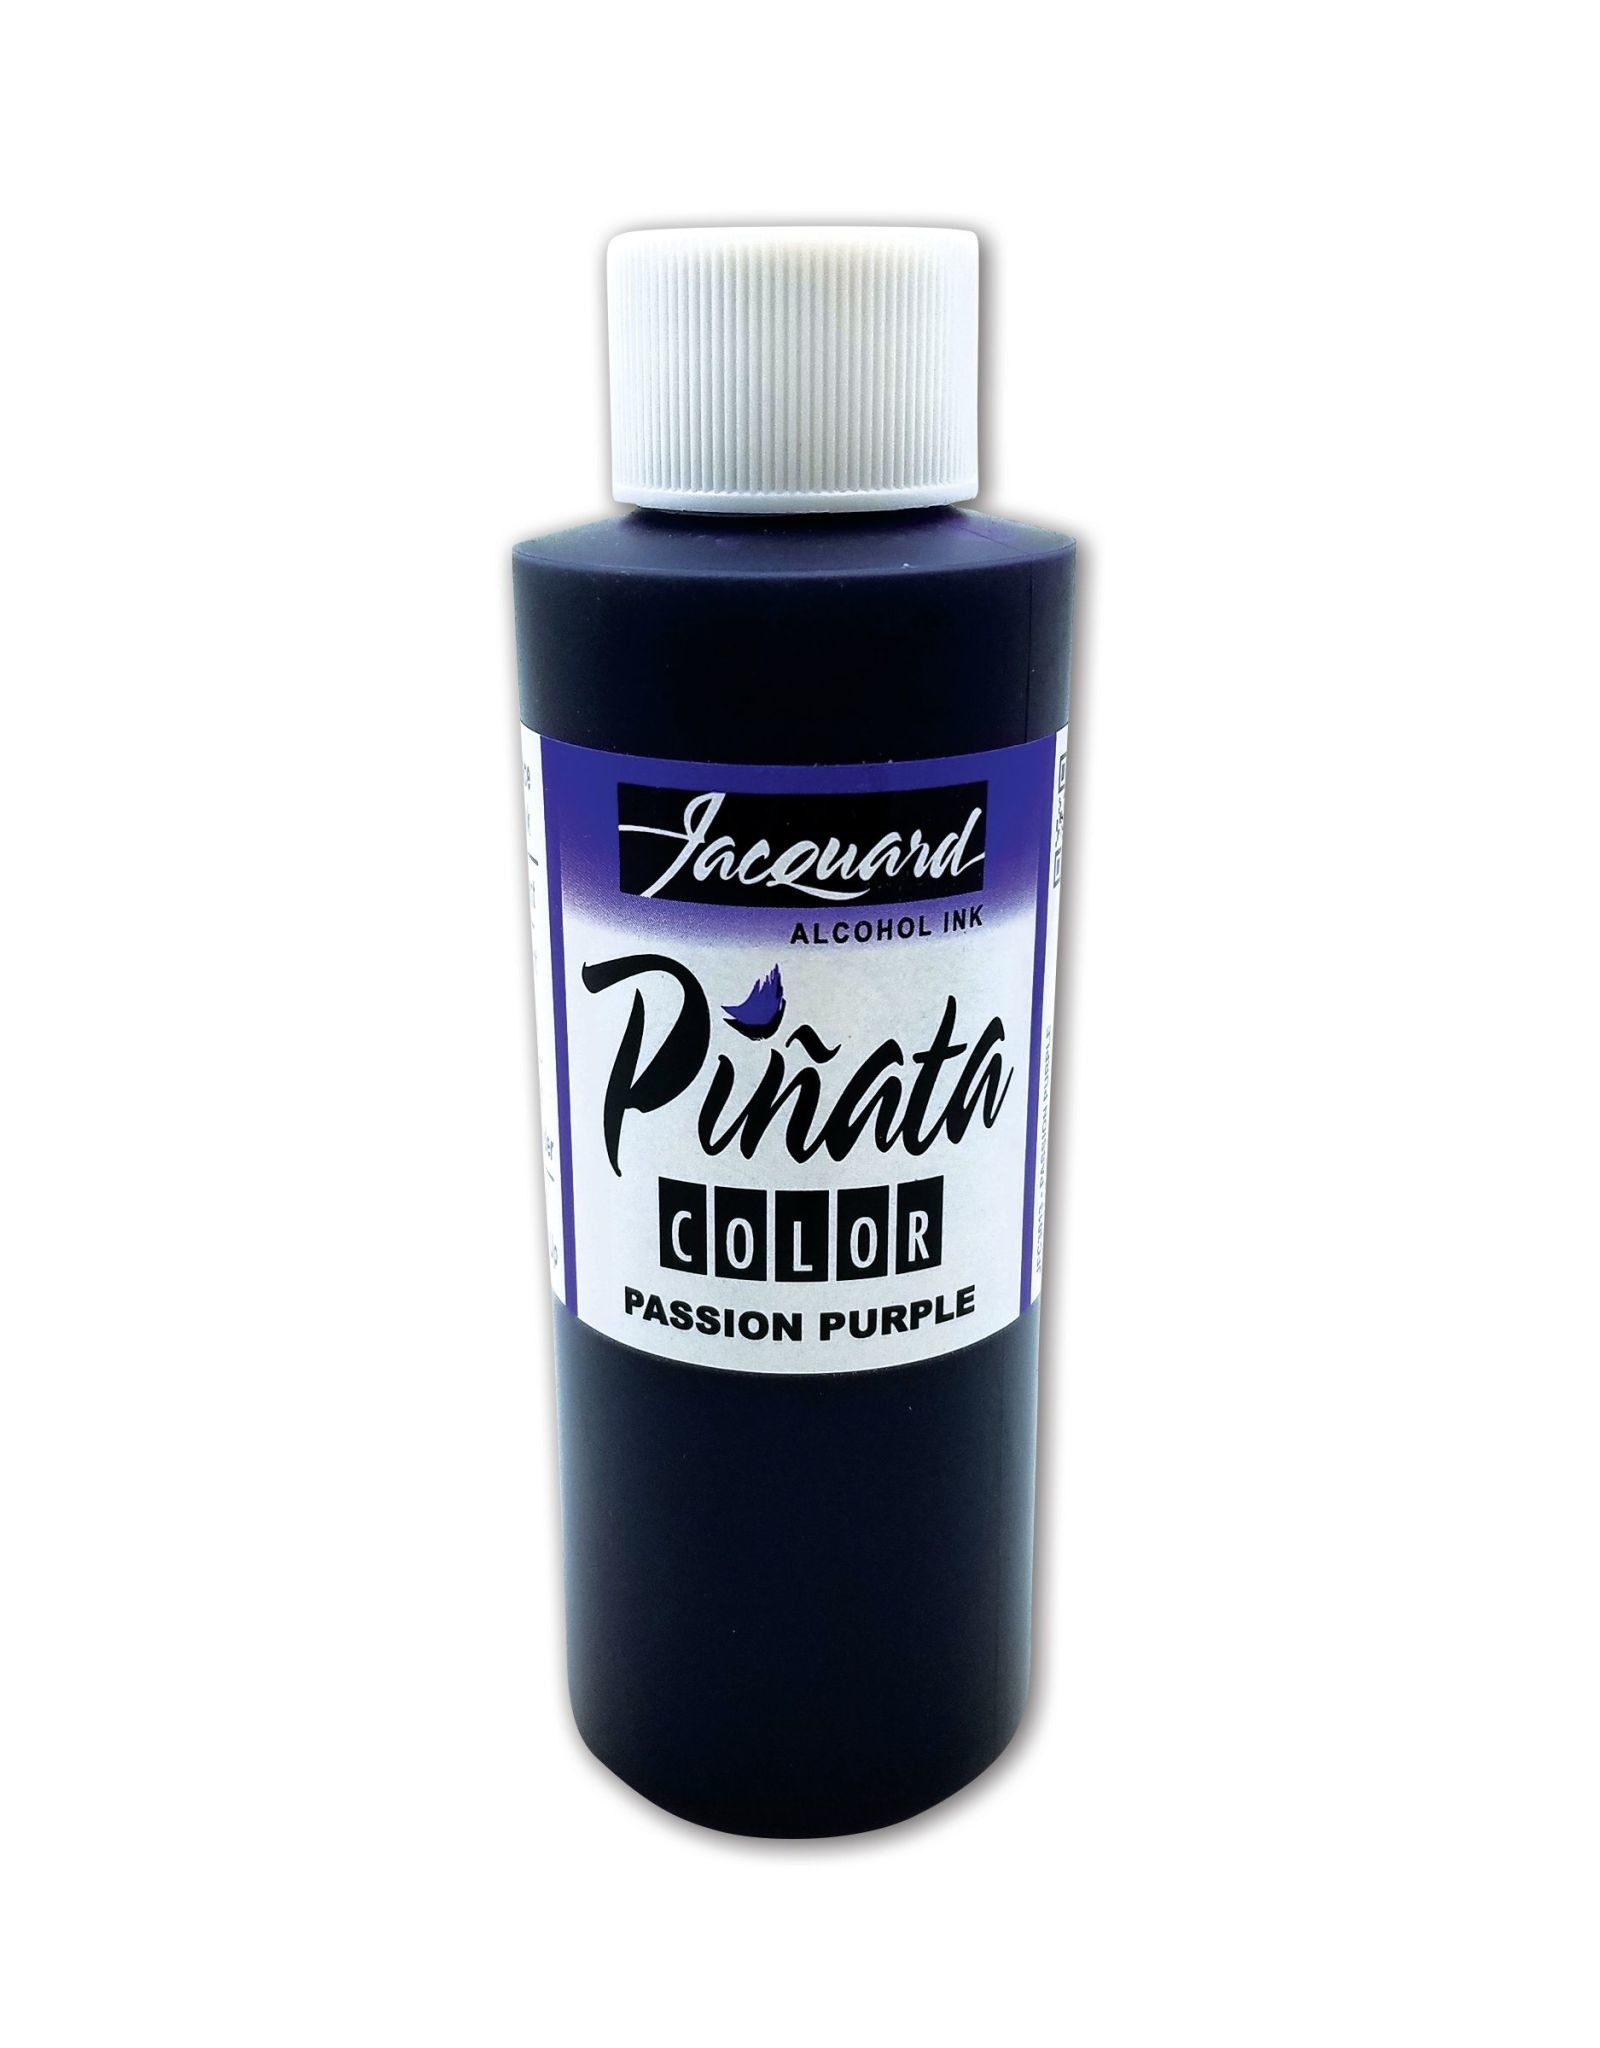 Jacquard Jacquard Pinata Alcohol Ink #013 Passion Purple 4oz